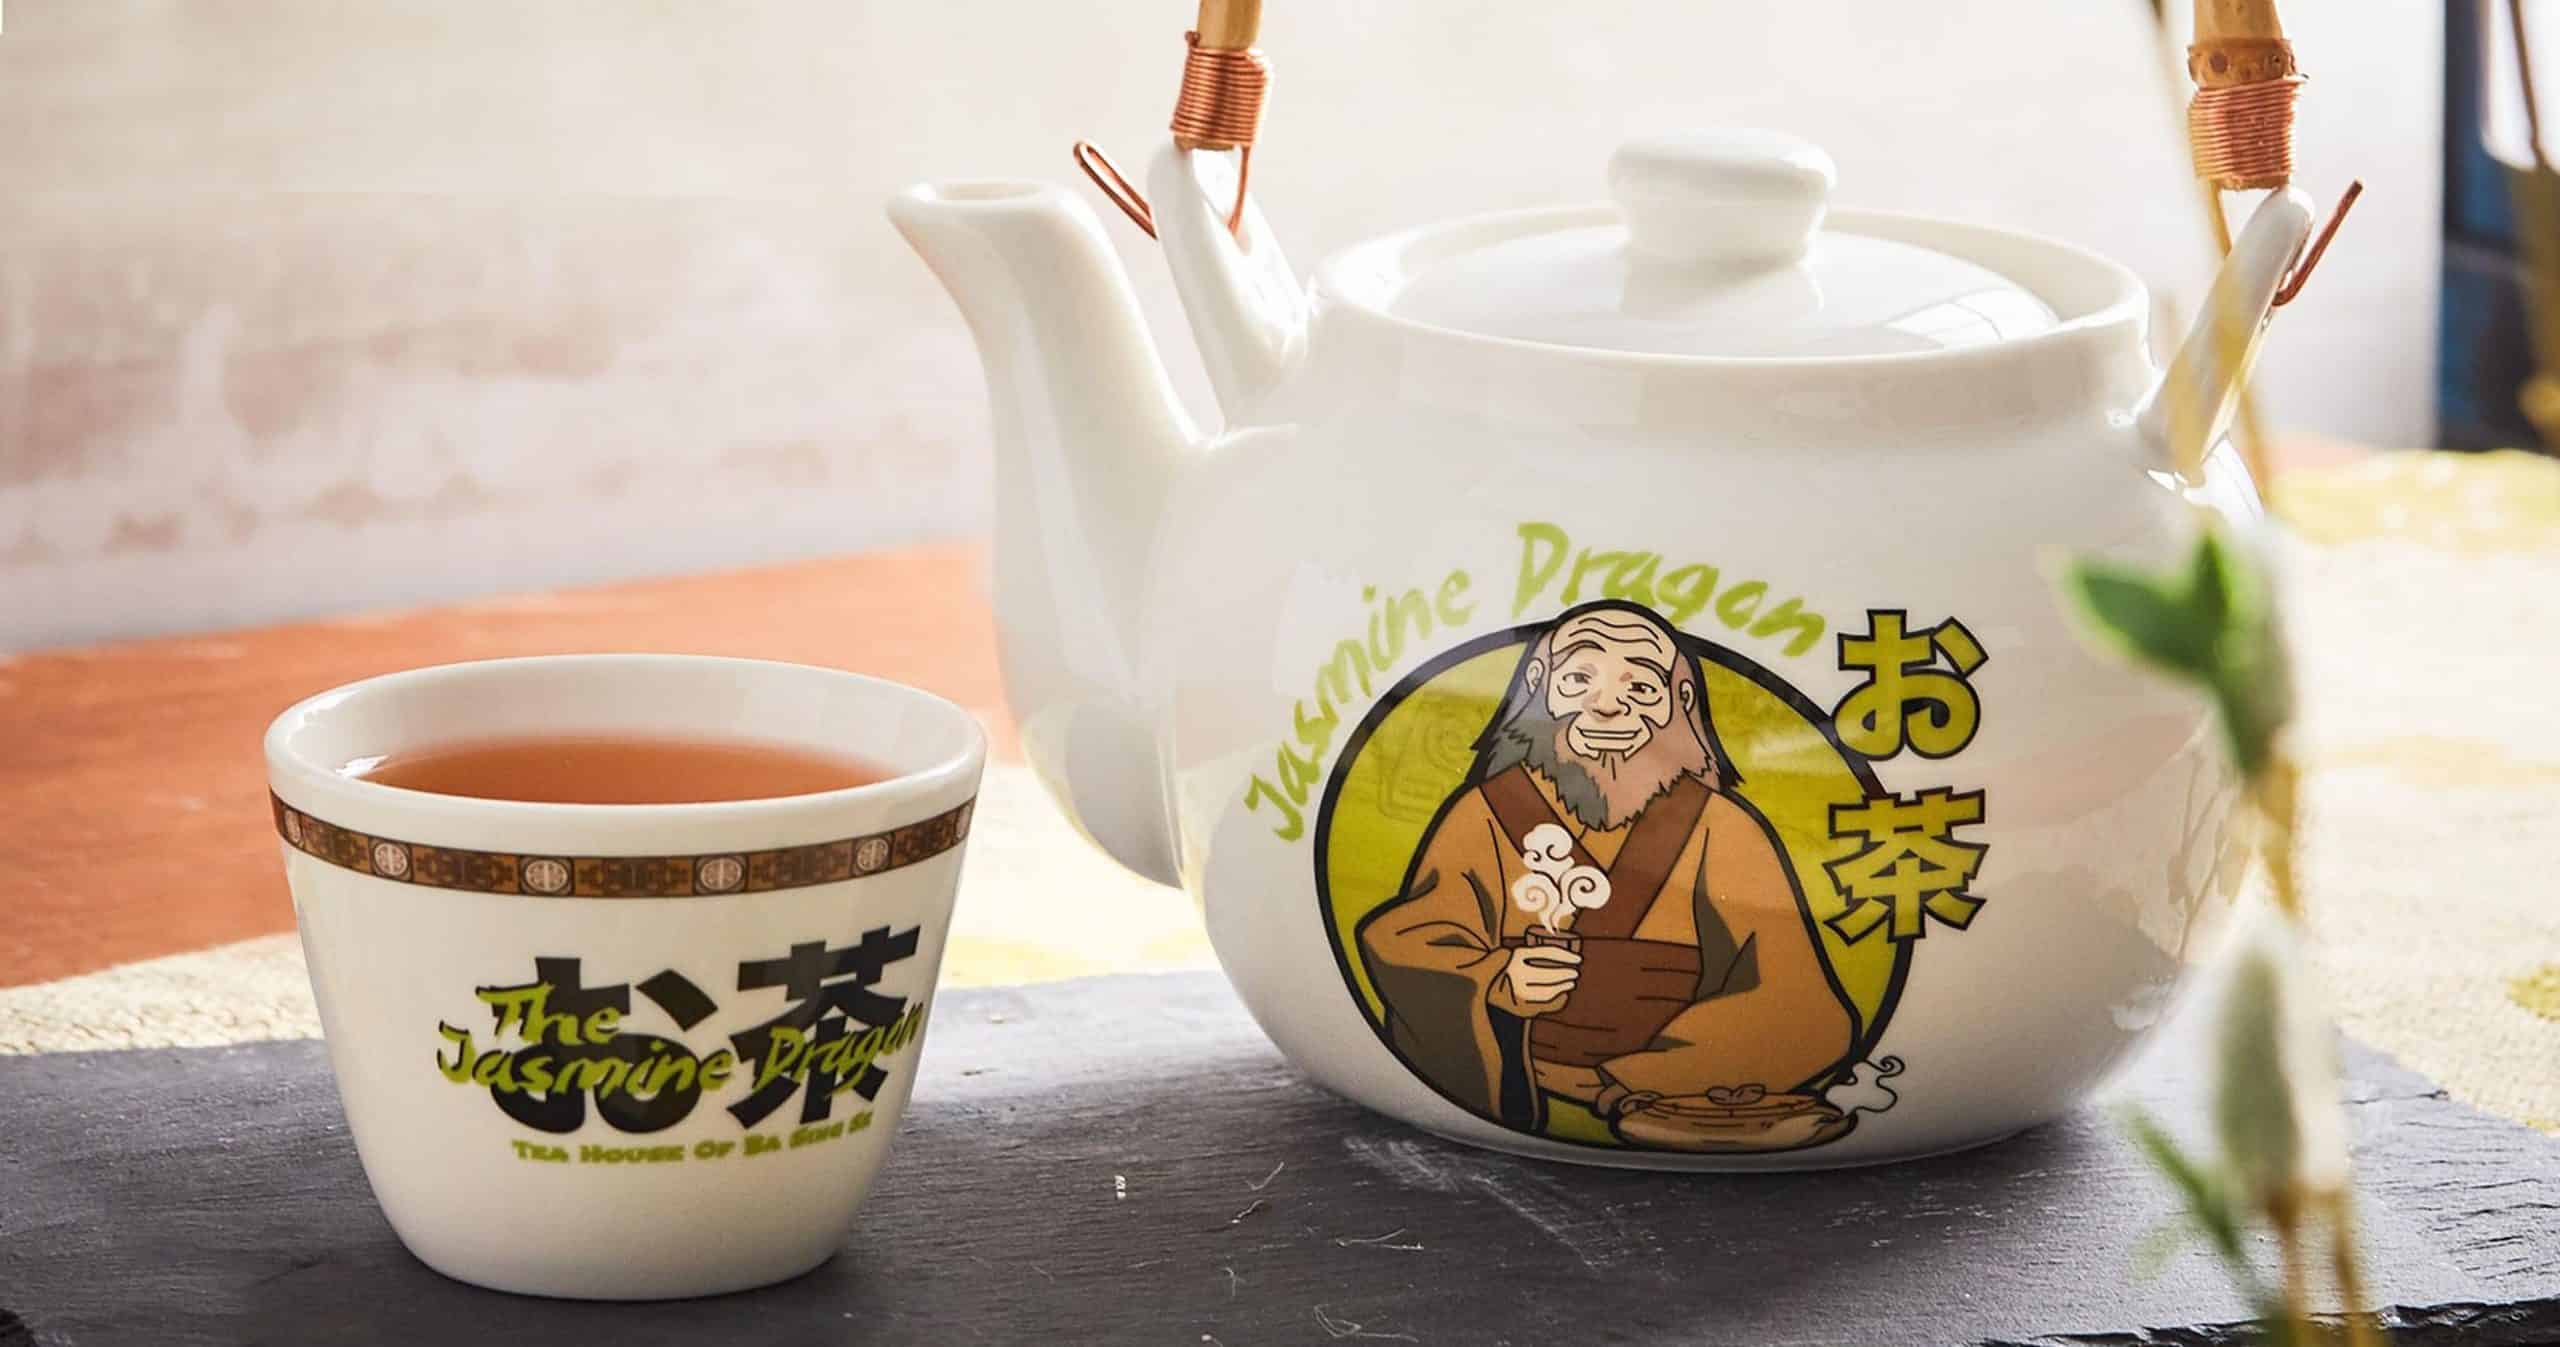 Details about   Jasmine Dragon Tea House Black Mug 